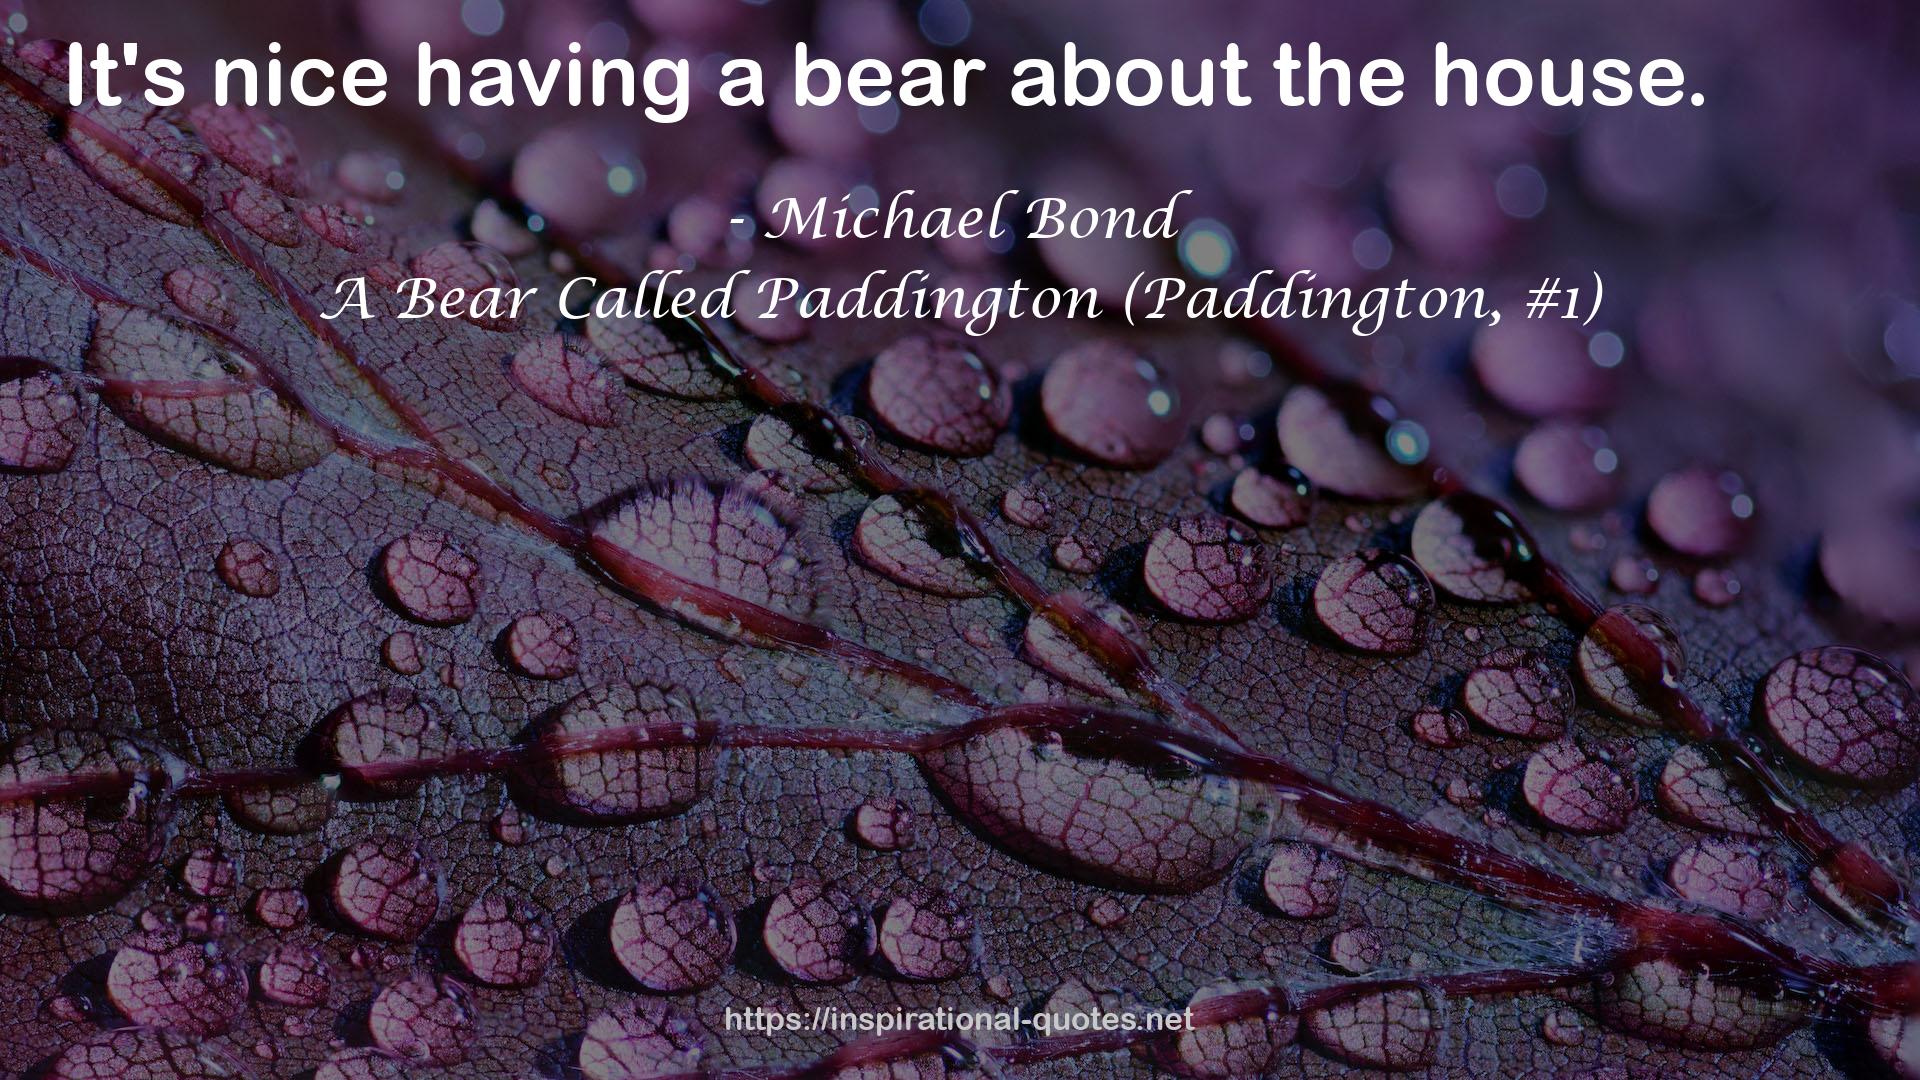 A Bear Called Paddington (Paddington, #1) QUOTES